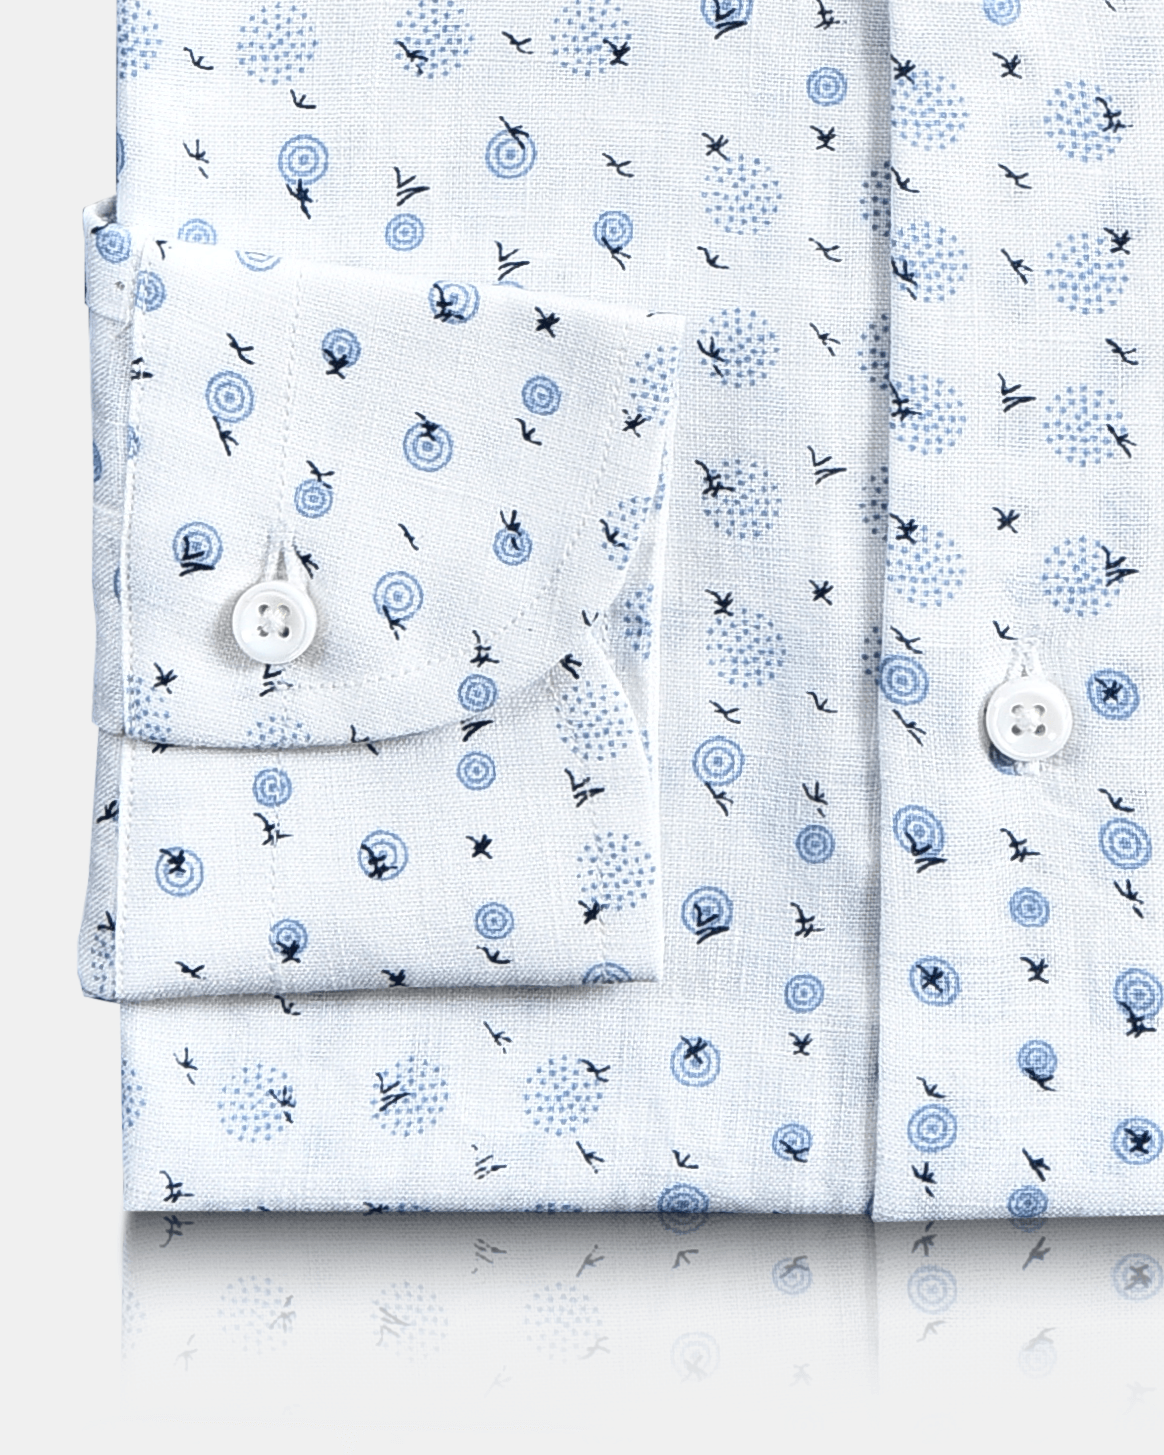 Cuff of custom linen shirt for men in printed birds